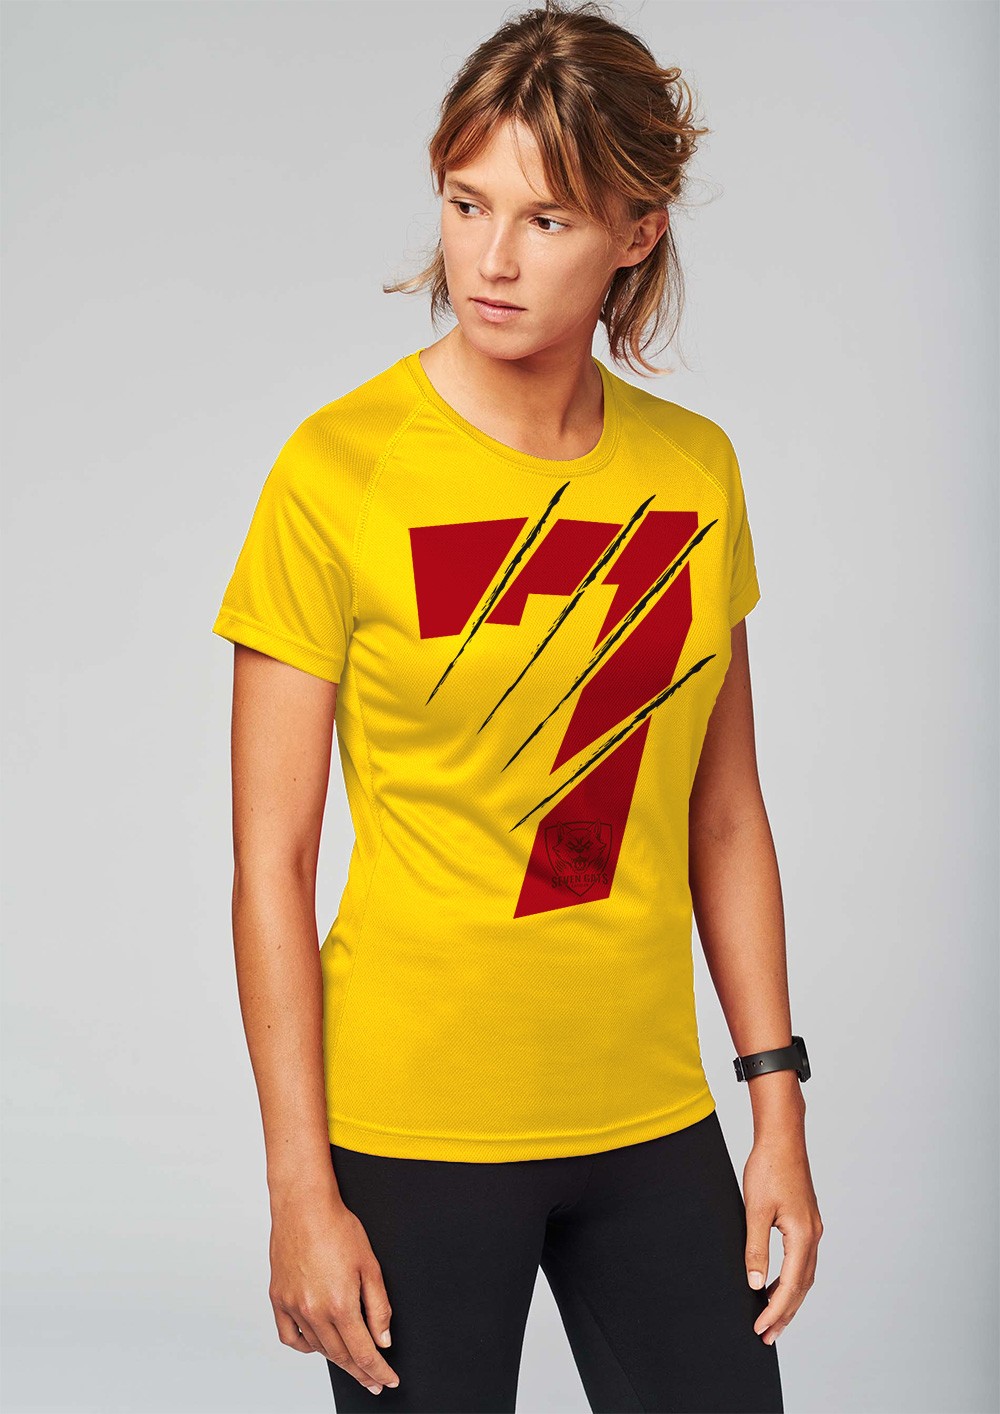 Tshirt sport femme Seven Gats - Le 7